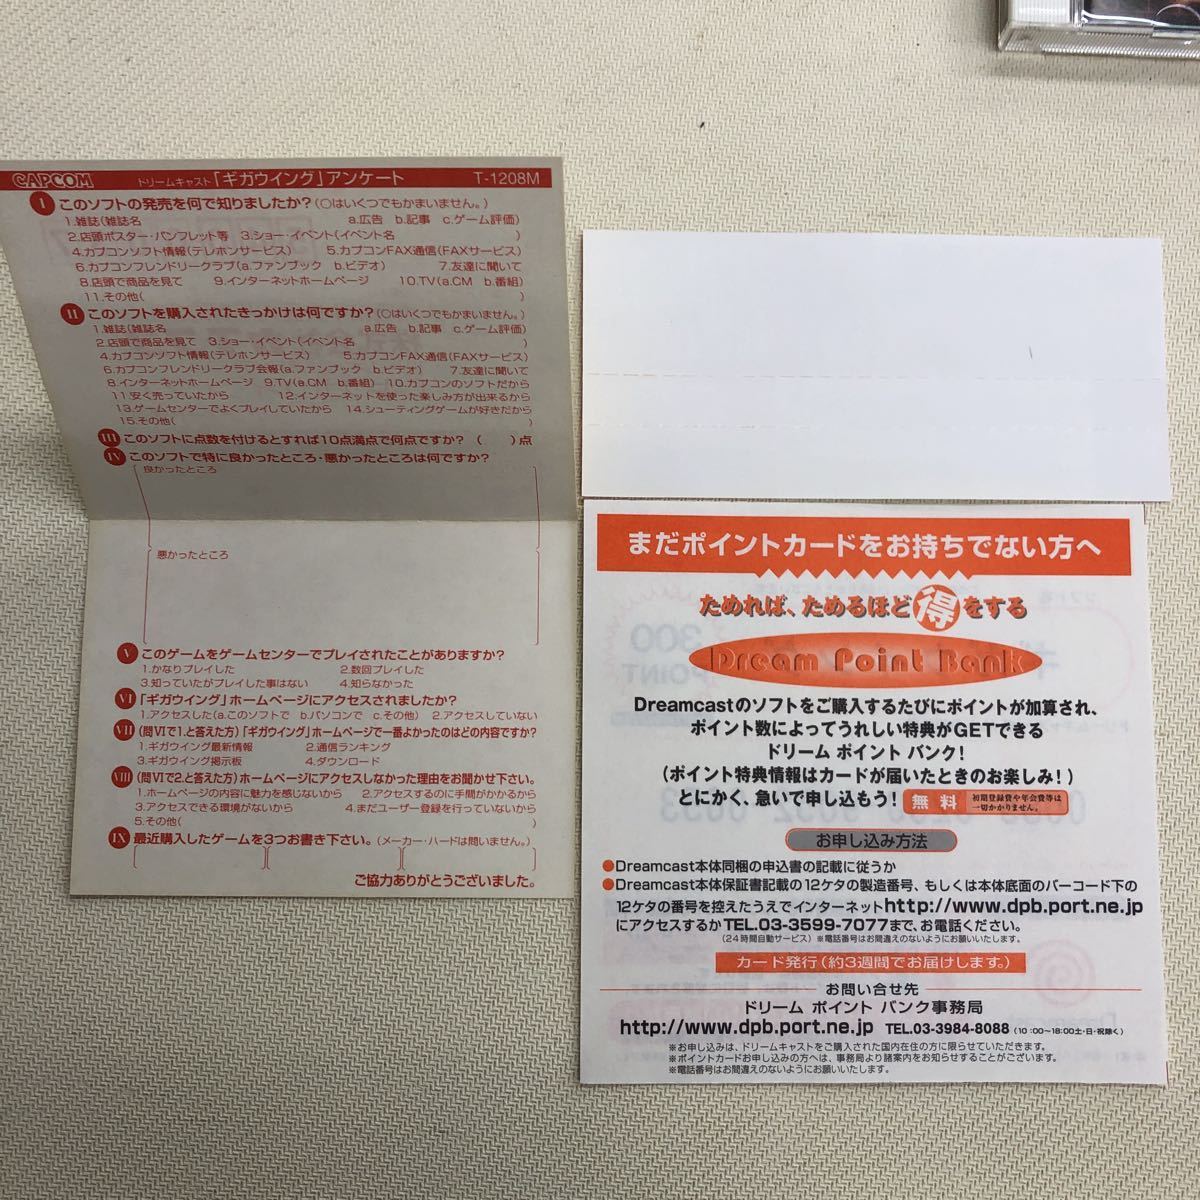  Dreamcast Giga Wing beautiful goods obi leaf document 